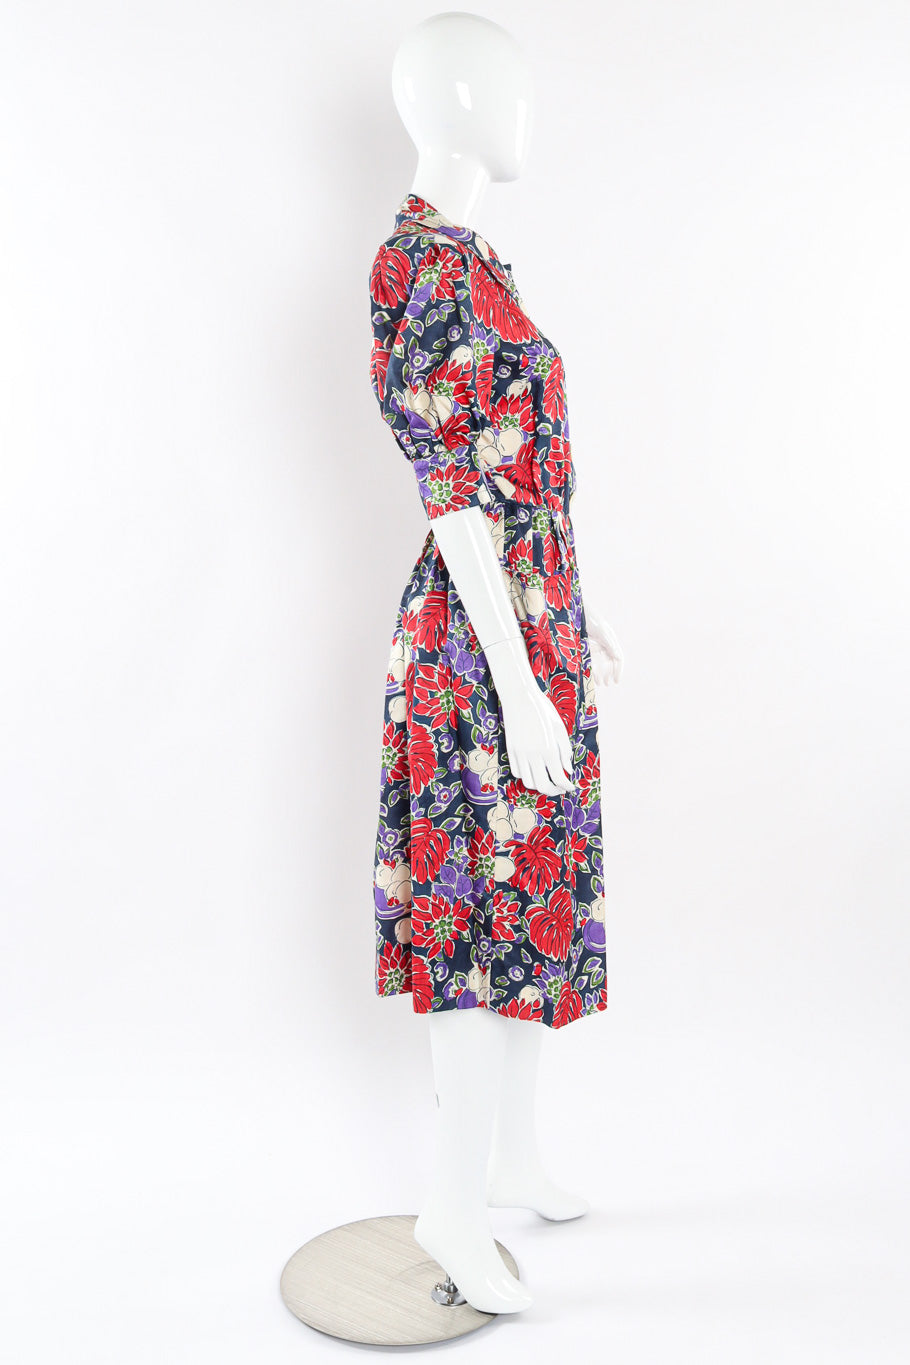 Multi-printed midi length dress by Yves Saint Laurent Side View @recessla